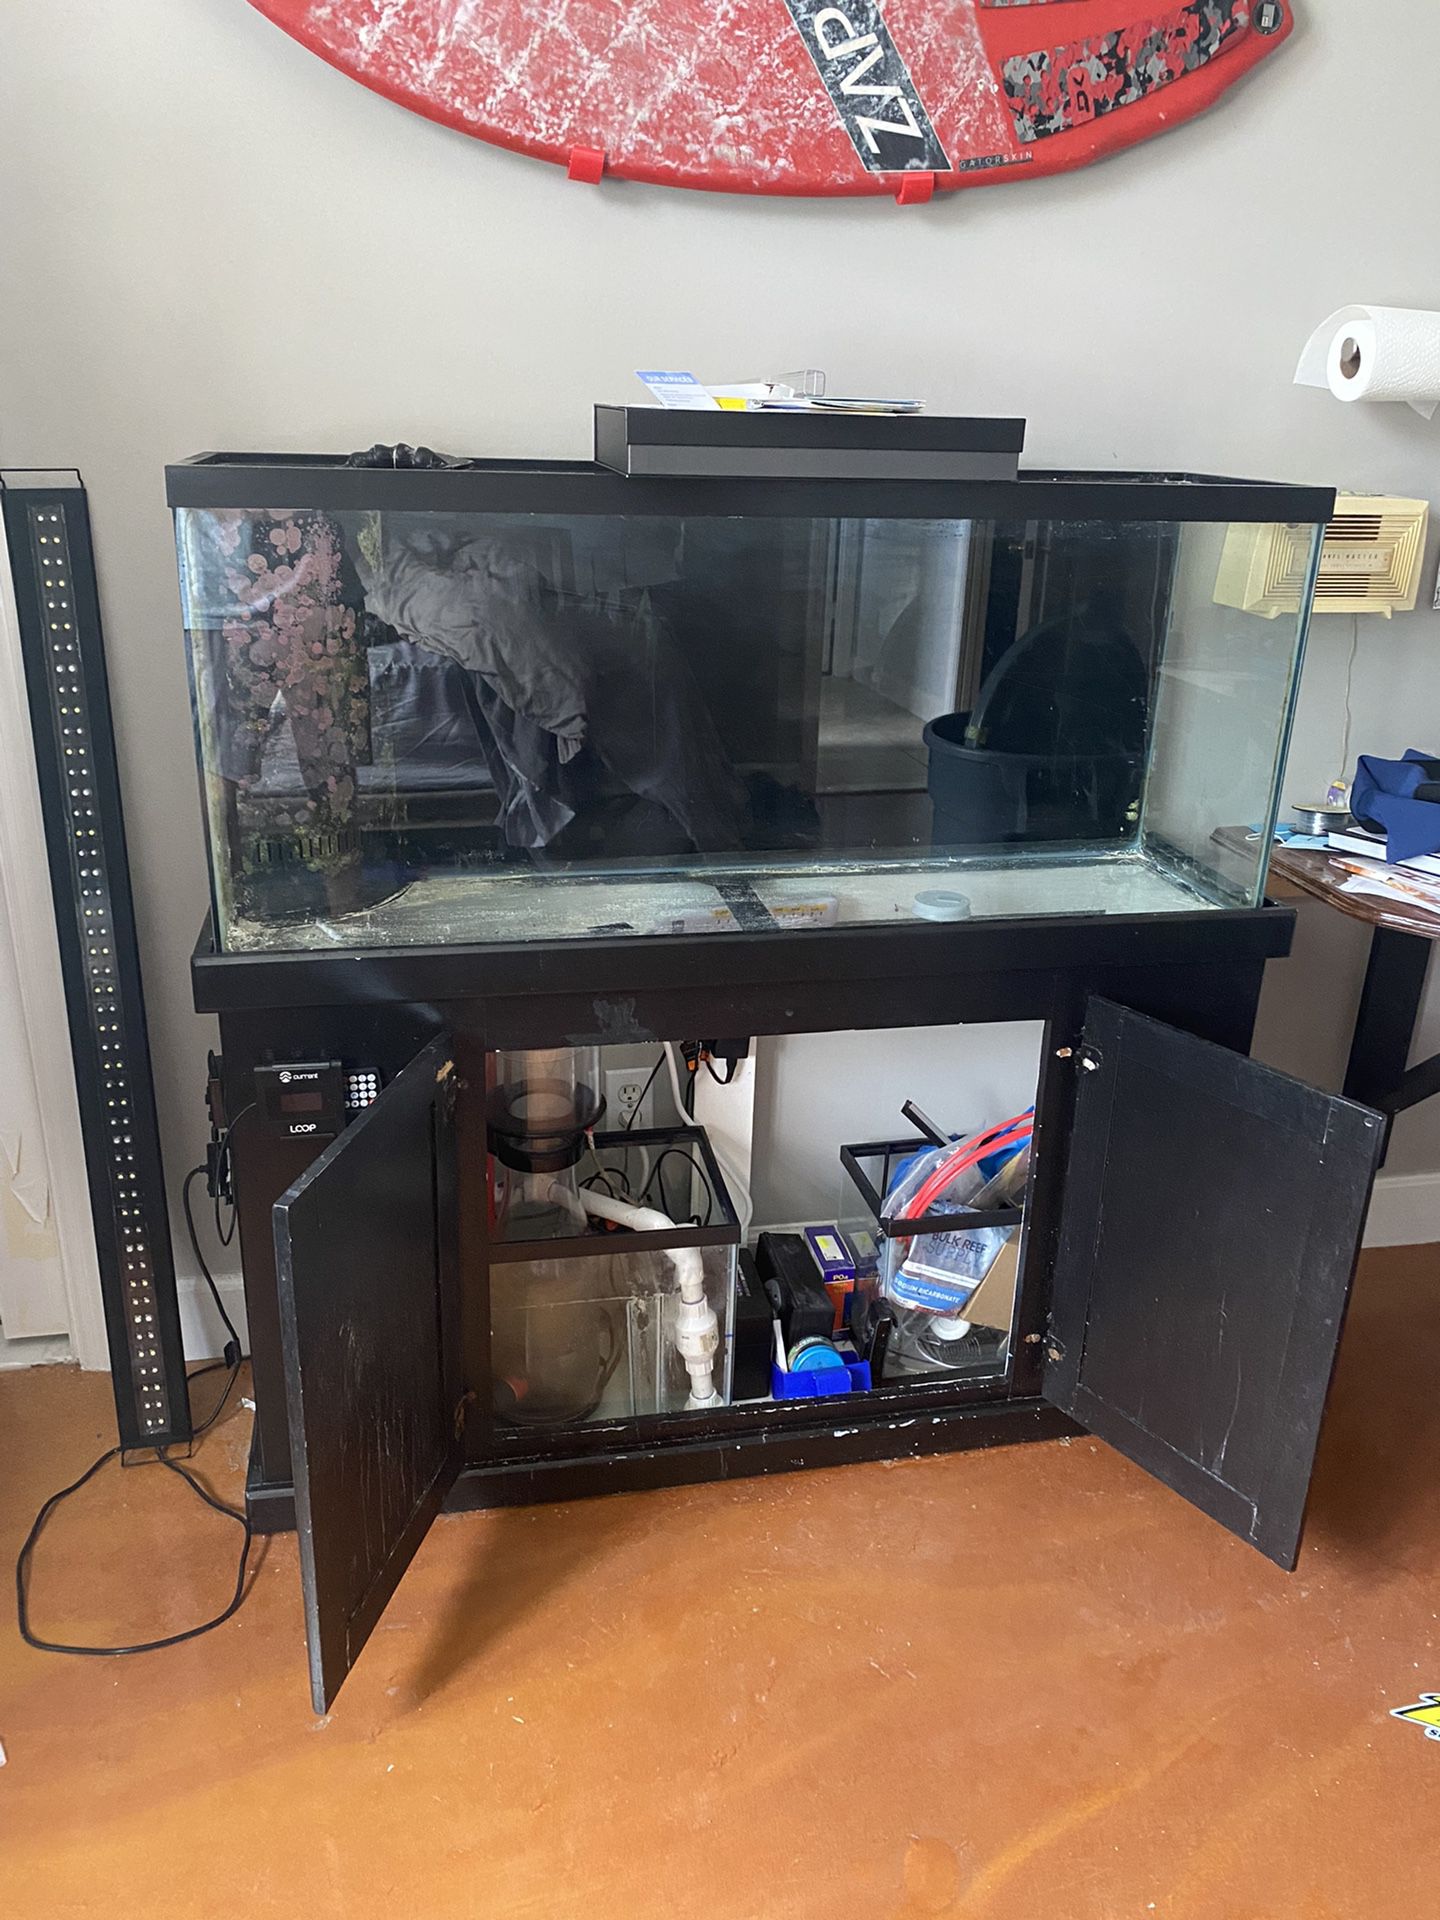 55 Gal Drilled Fish Tank Aquarium And Stand